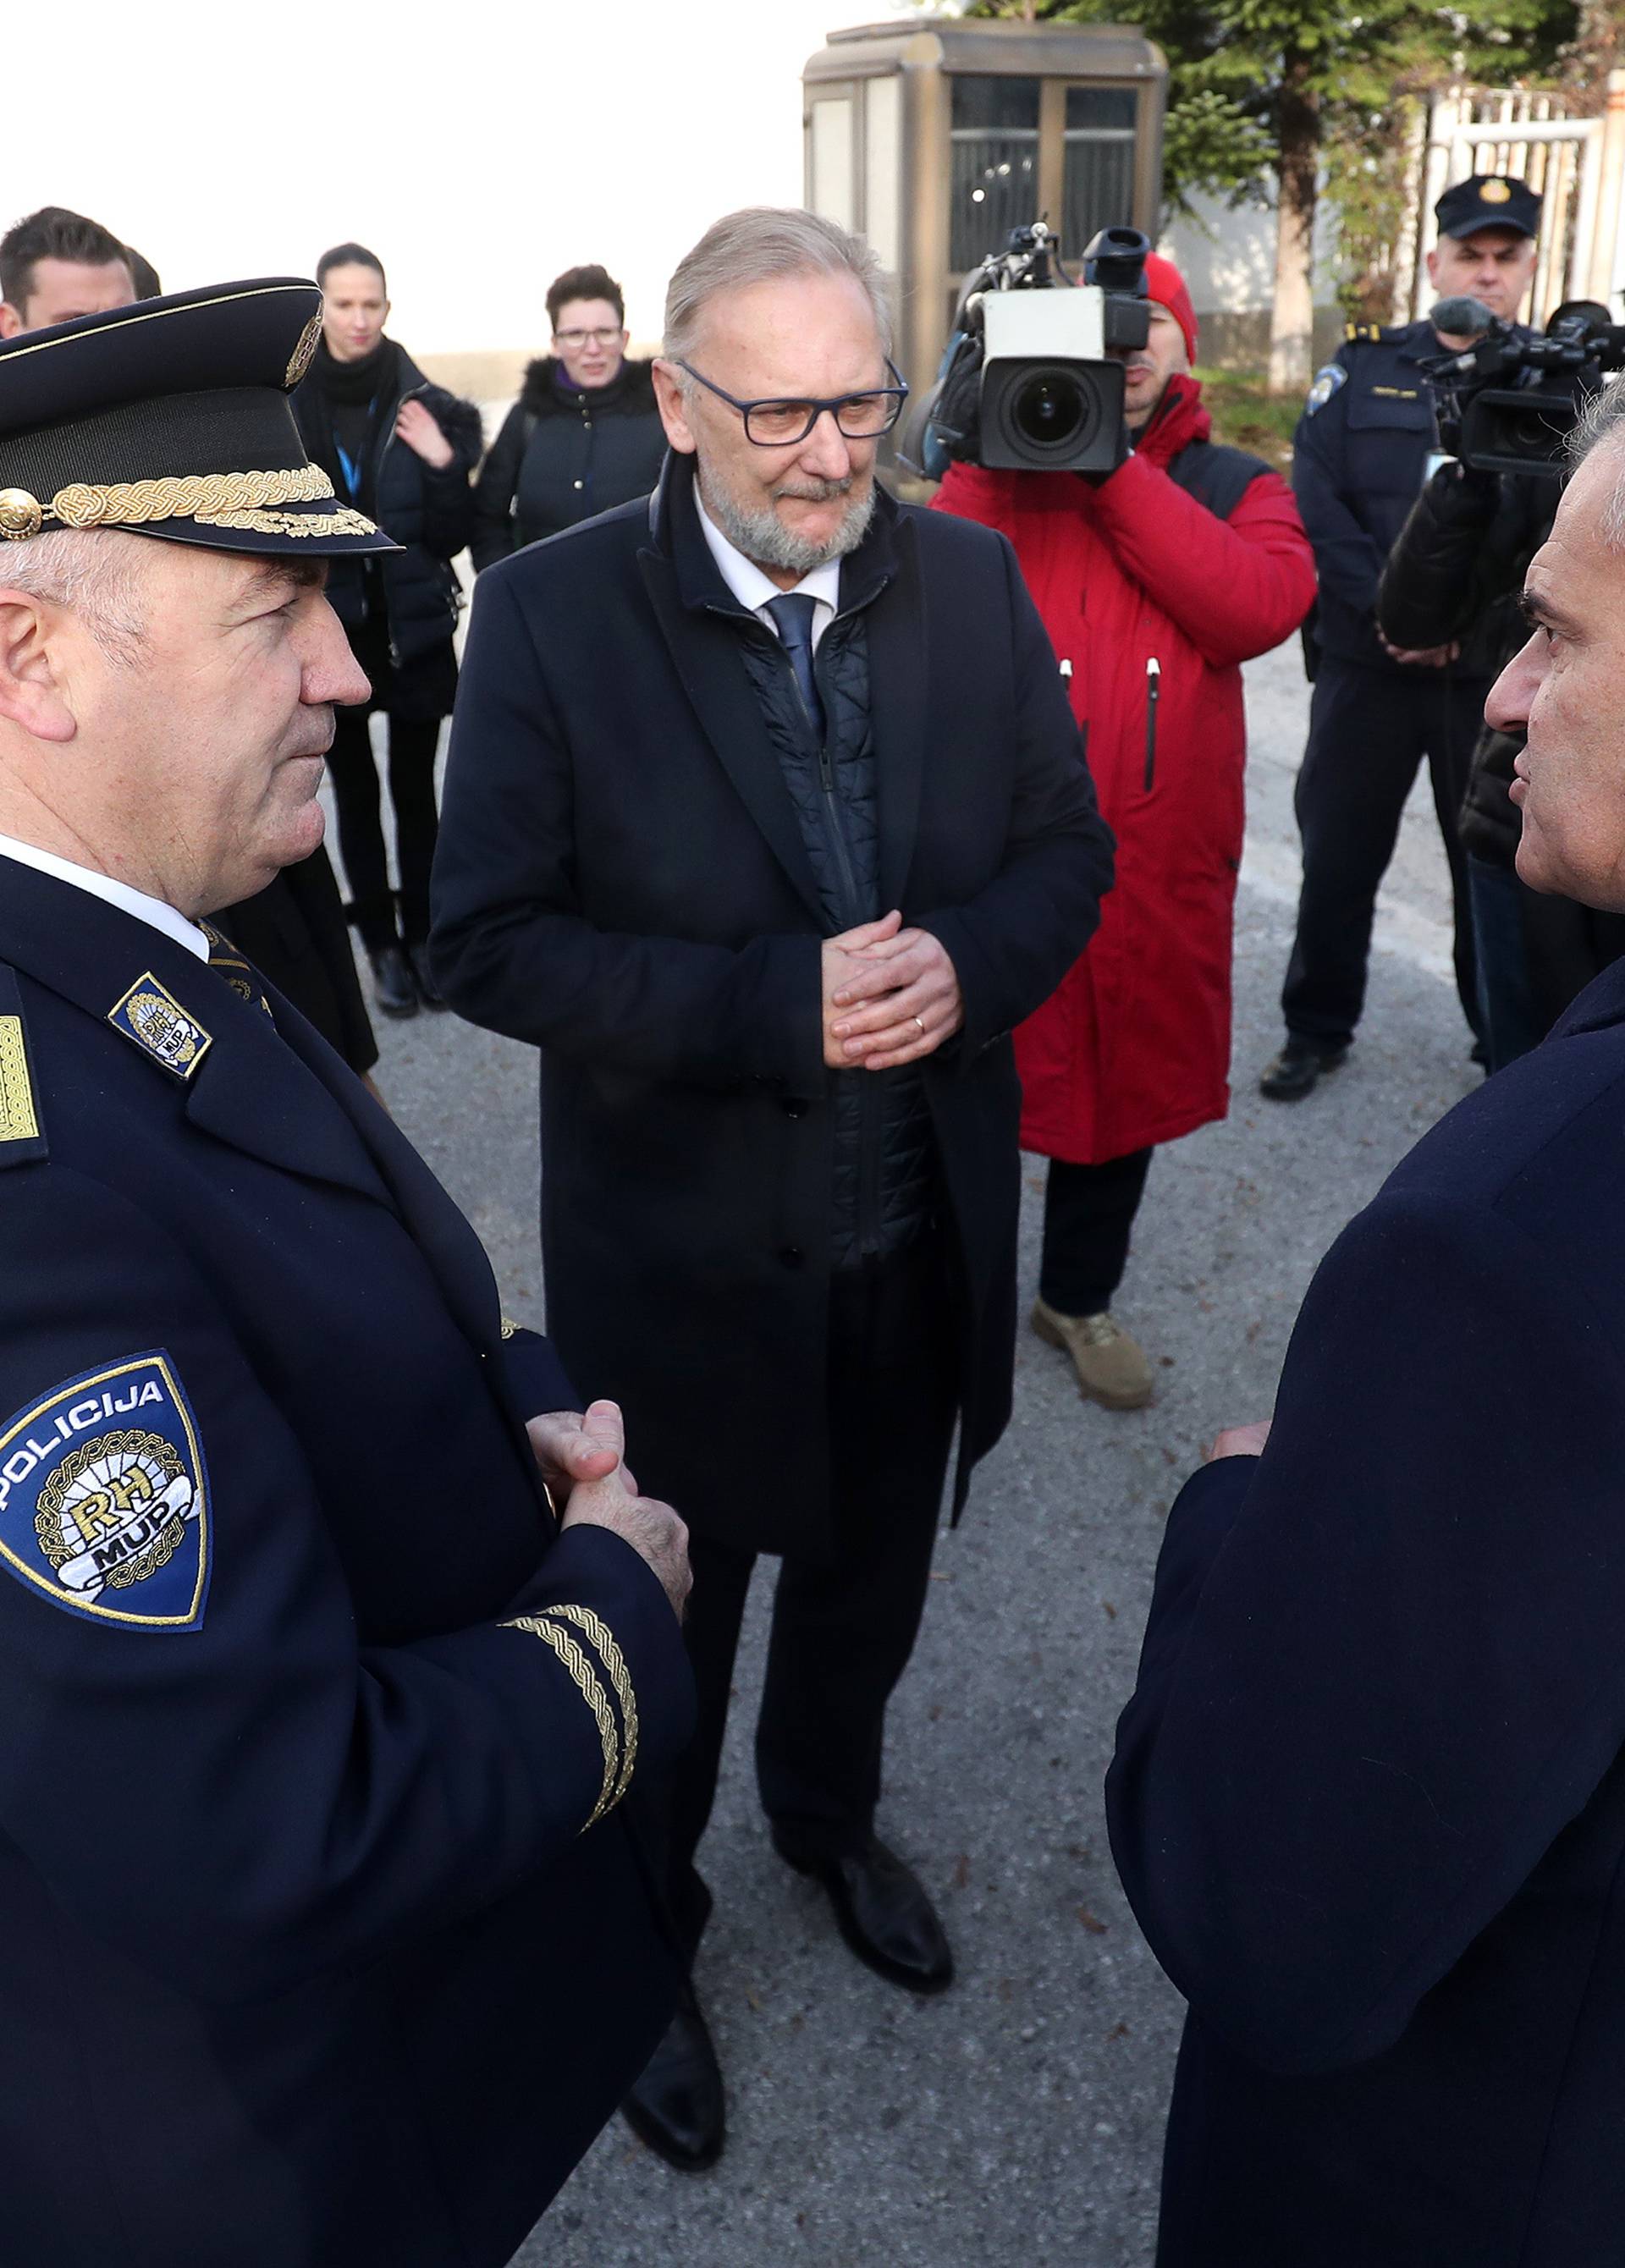 Zagreb: Policiji uruÄeno deset novih kombija s forenziÄkom opremom